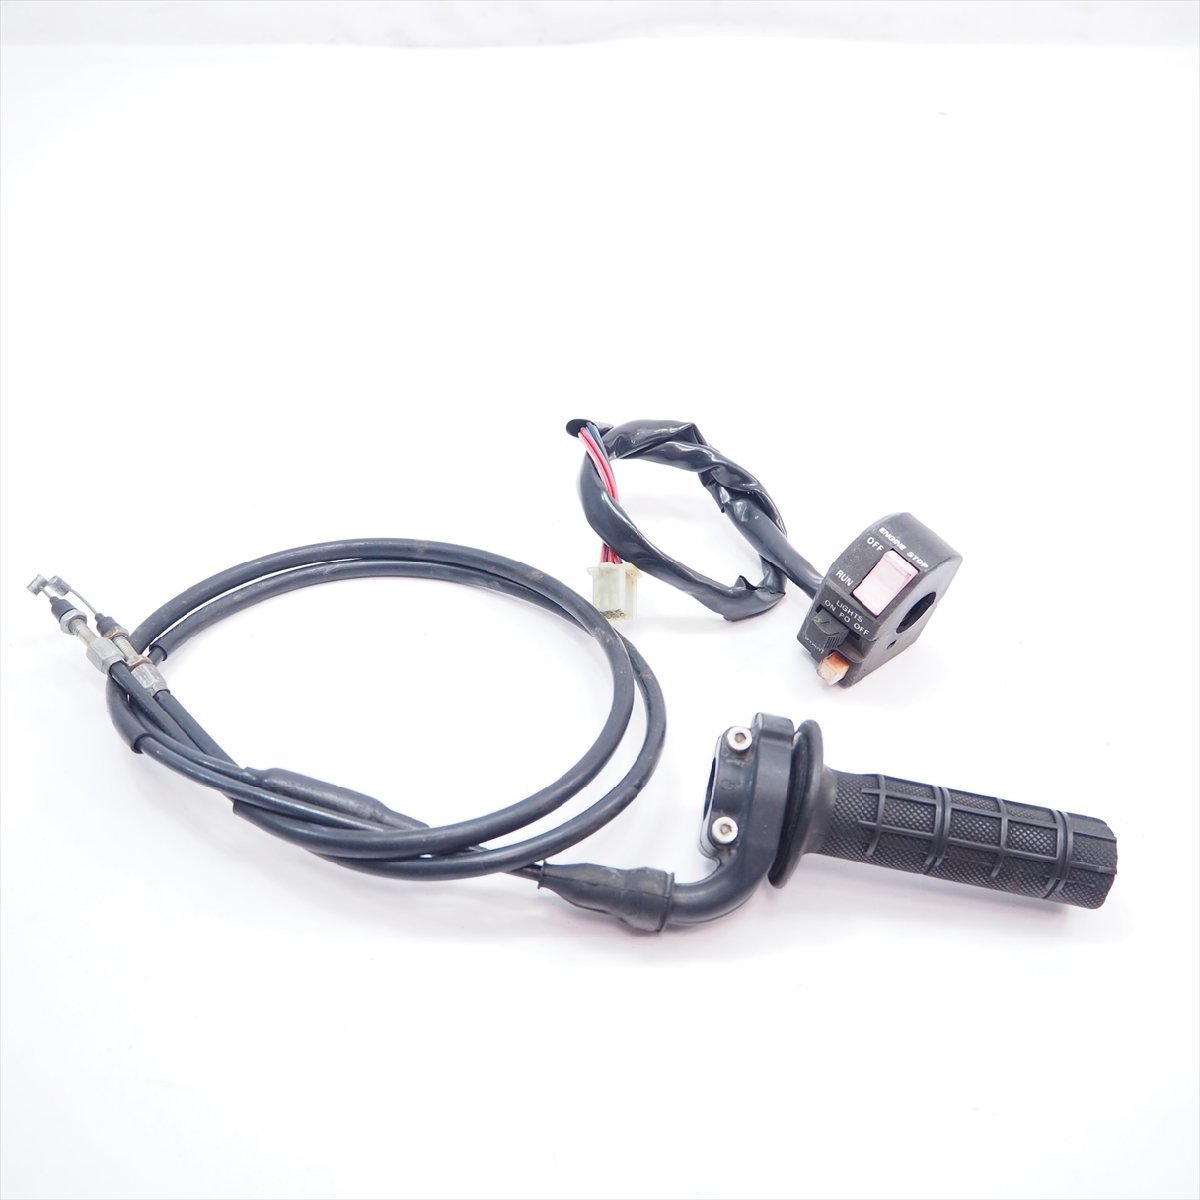 TT250R 4GY-005 93 year remove original handle switch right throttle holder grip wire Raido Raid 93-97 year 